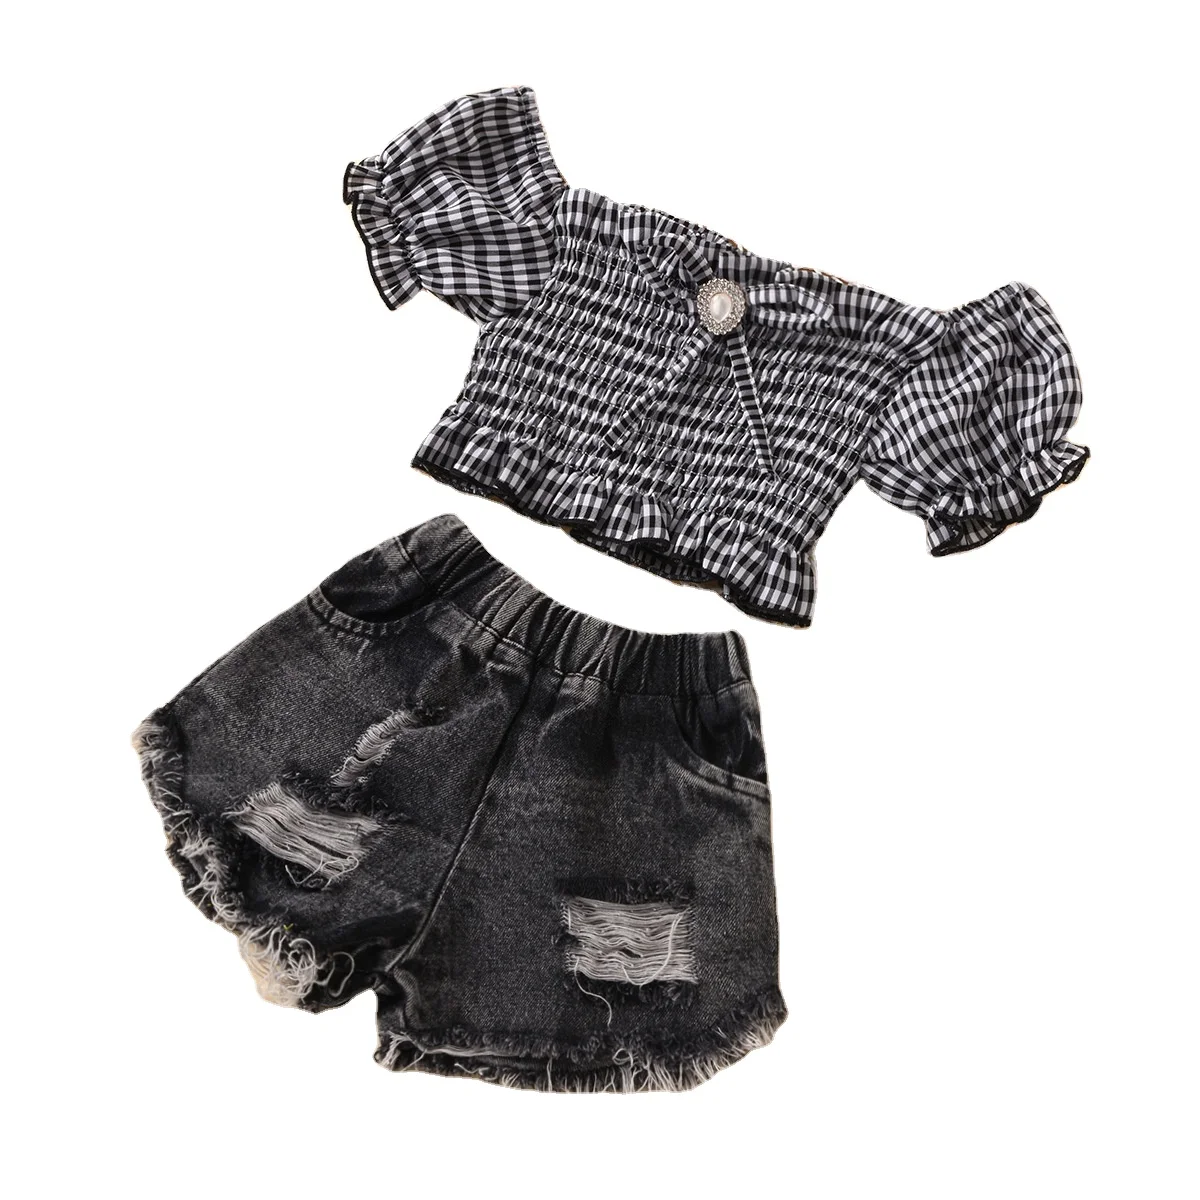 Mountain Warehouse Coeus 2pcs Suit Toddler Kids Baby Girls Outfits Short Sleeve T-Shirt+Pants Clothes Set